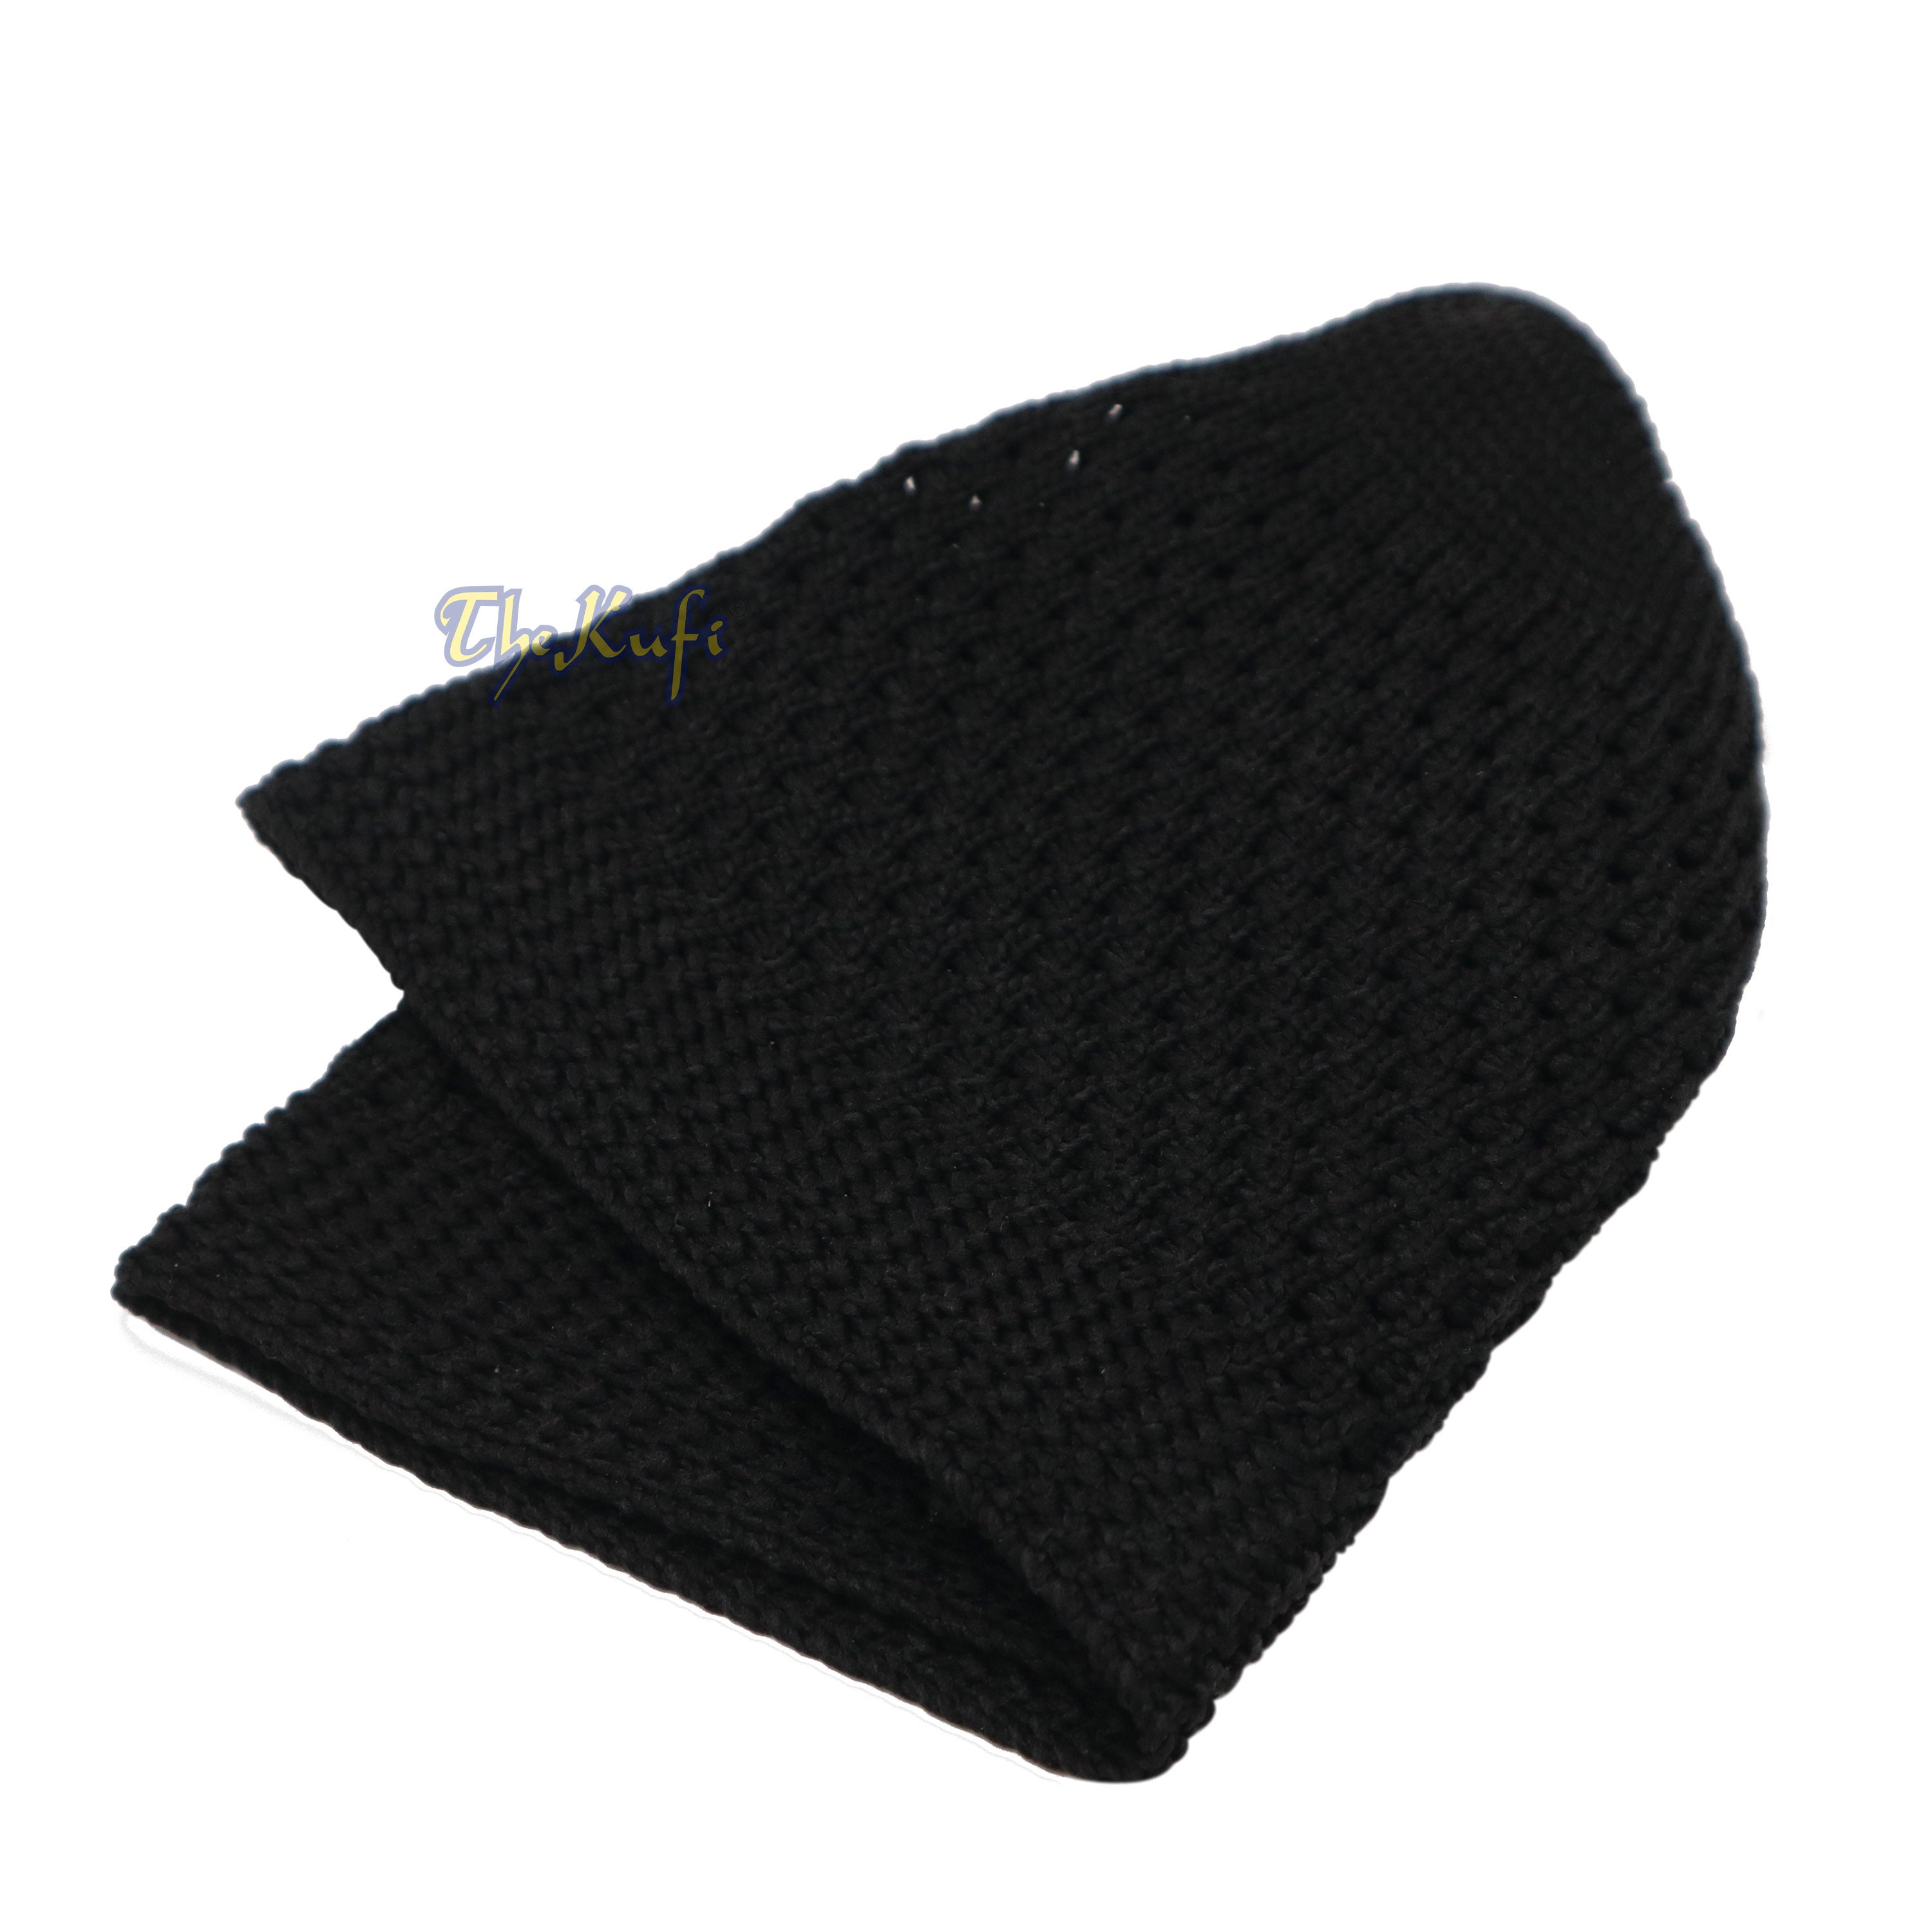 Black Takke 4X Etsy up MISWAK FREE Kufi XS Prayer Nylon Headcover Skull to - Beanie Skullie Knit Cap Muslim Topi Stretchy Open-weave Hat Sizes